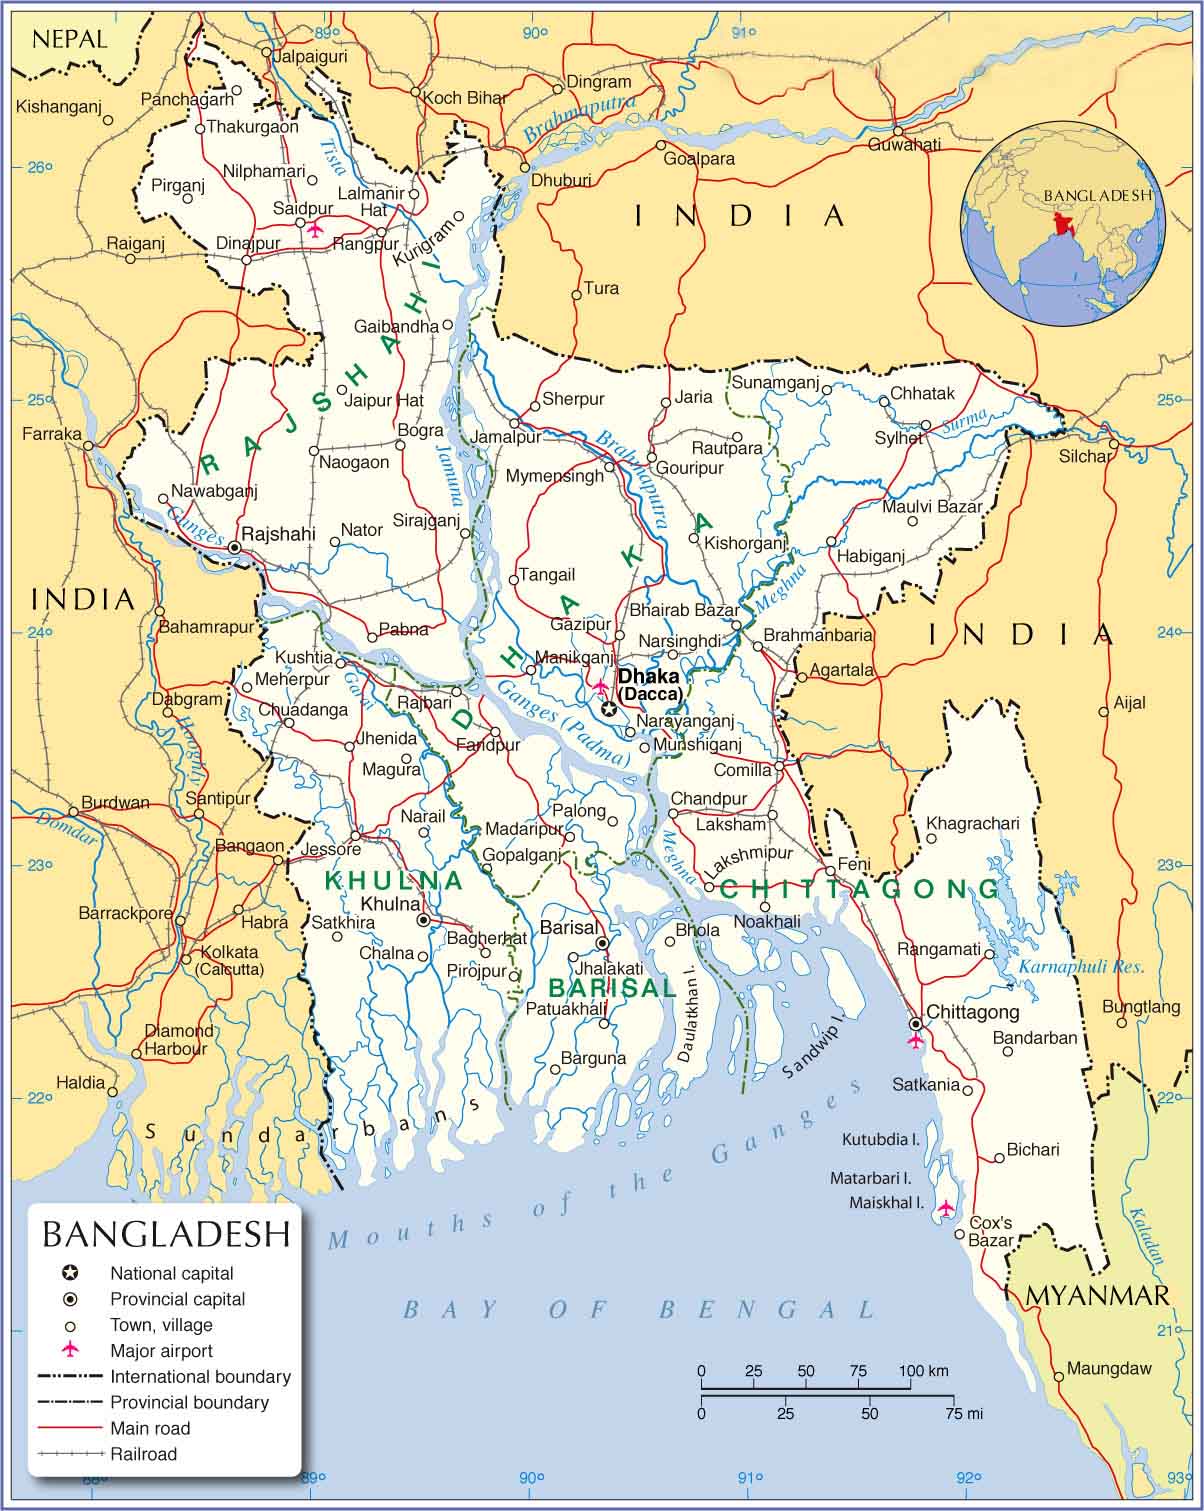 Bangladesh Updates - IEDAP